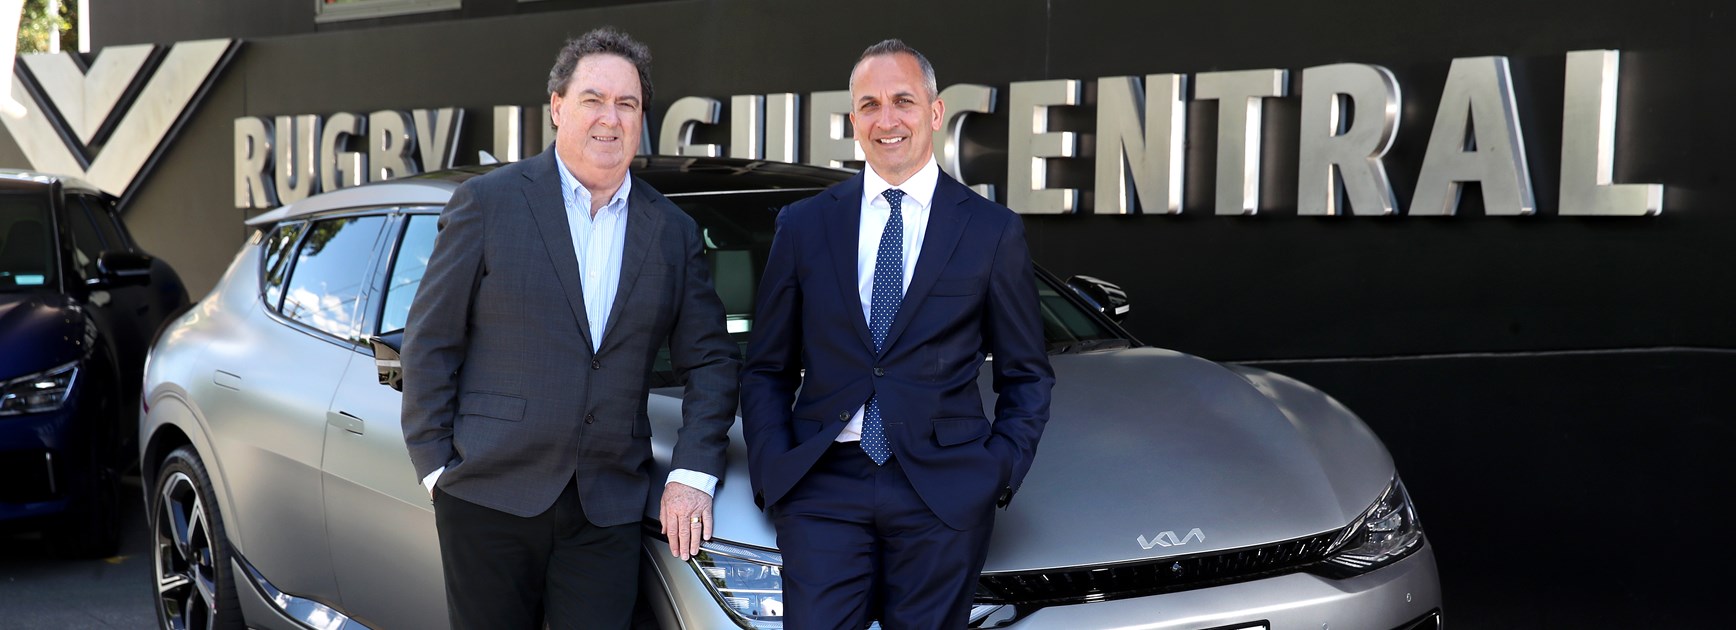 NRL announce new partnership with Kia Australia